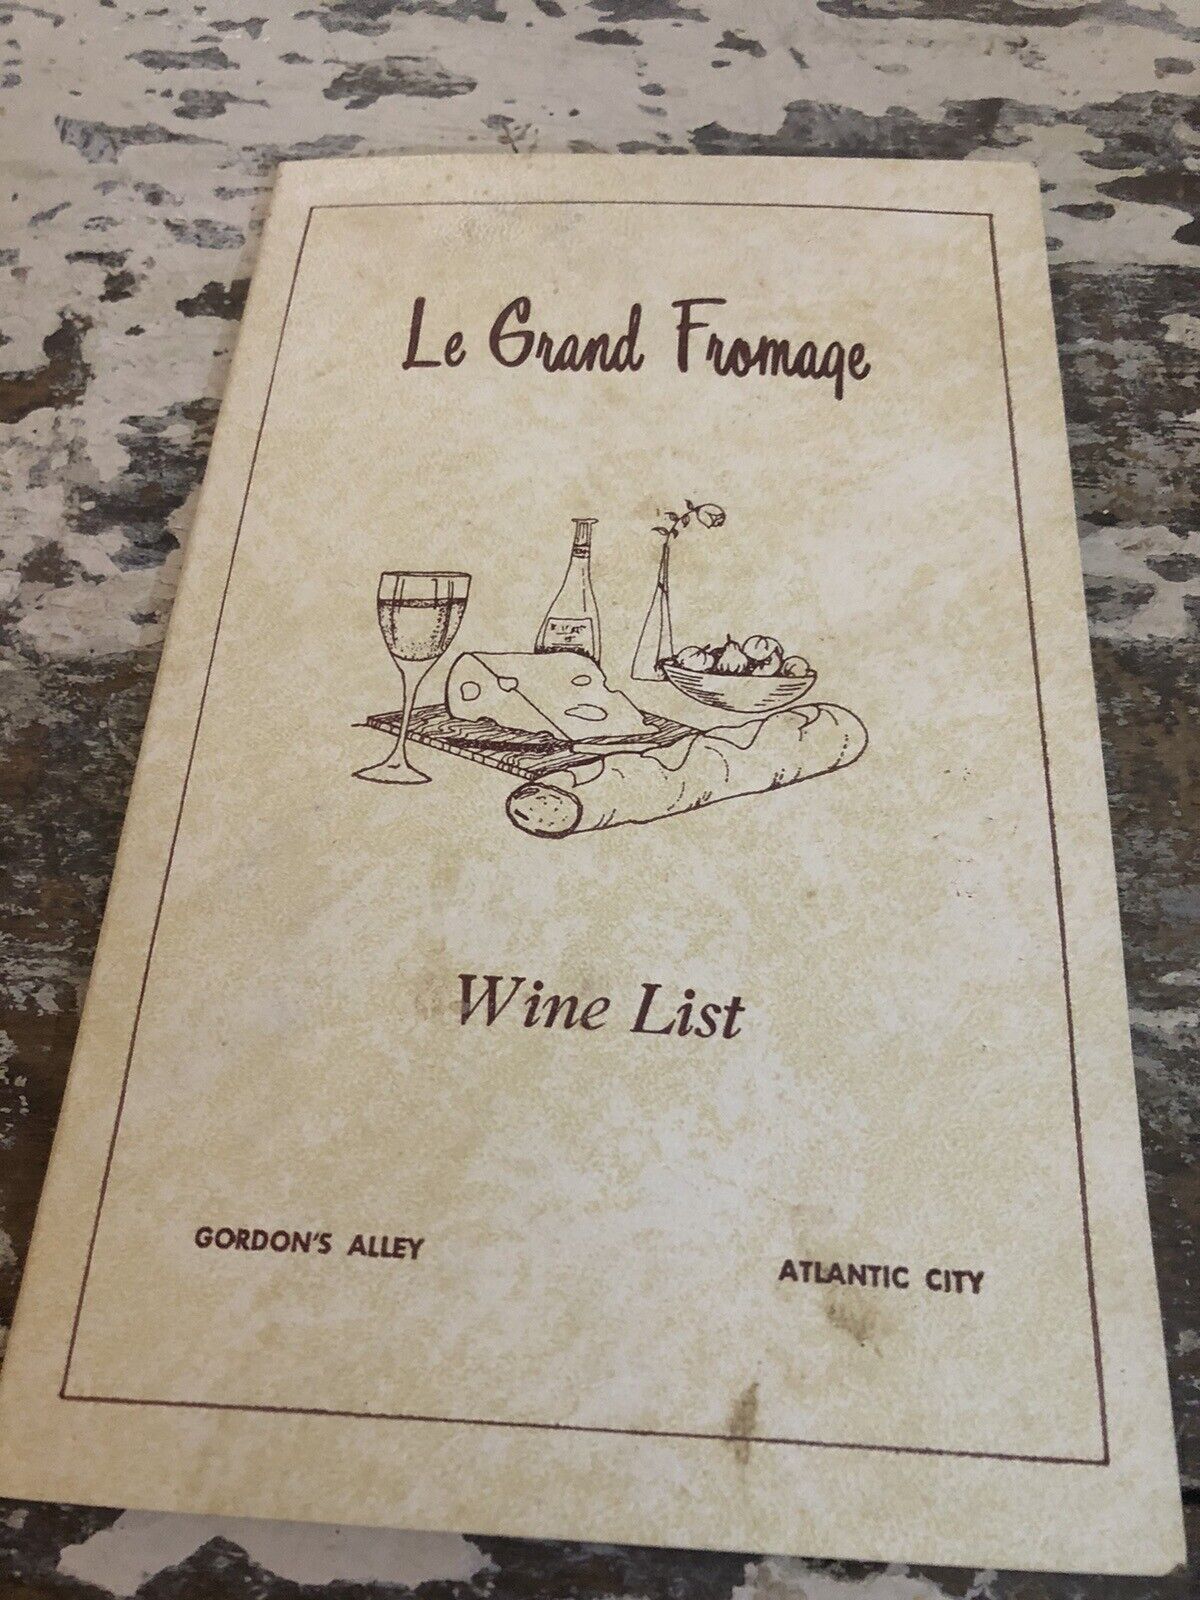 Lee Grand Formate Wine List And Menu, Gordon’s Alley, Atlantic City